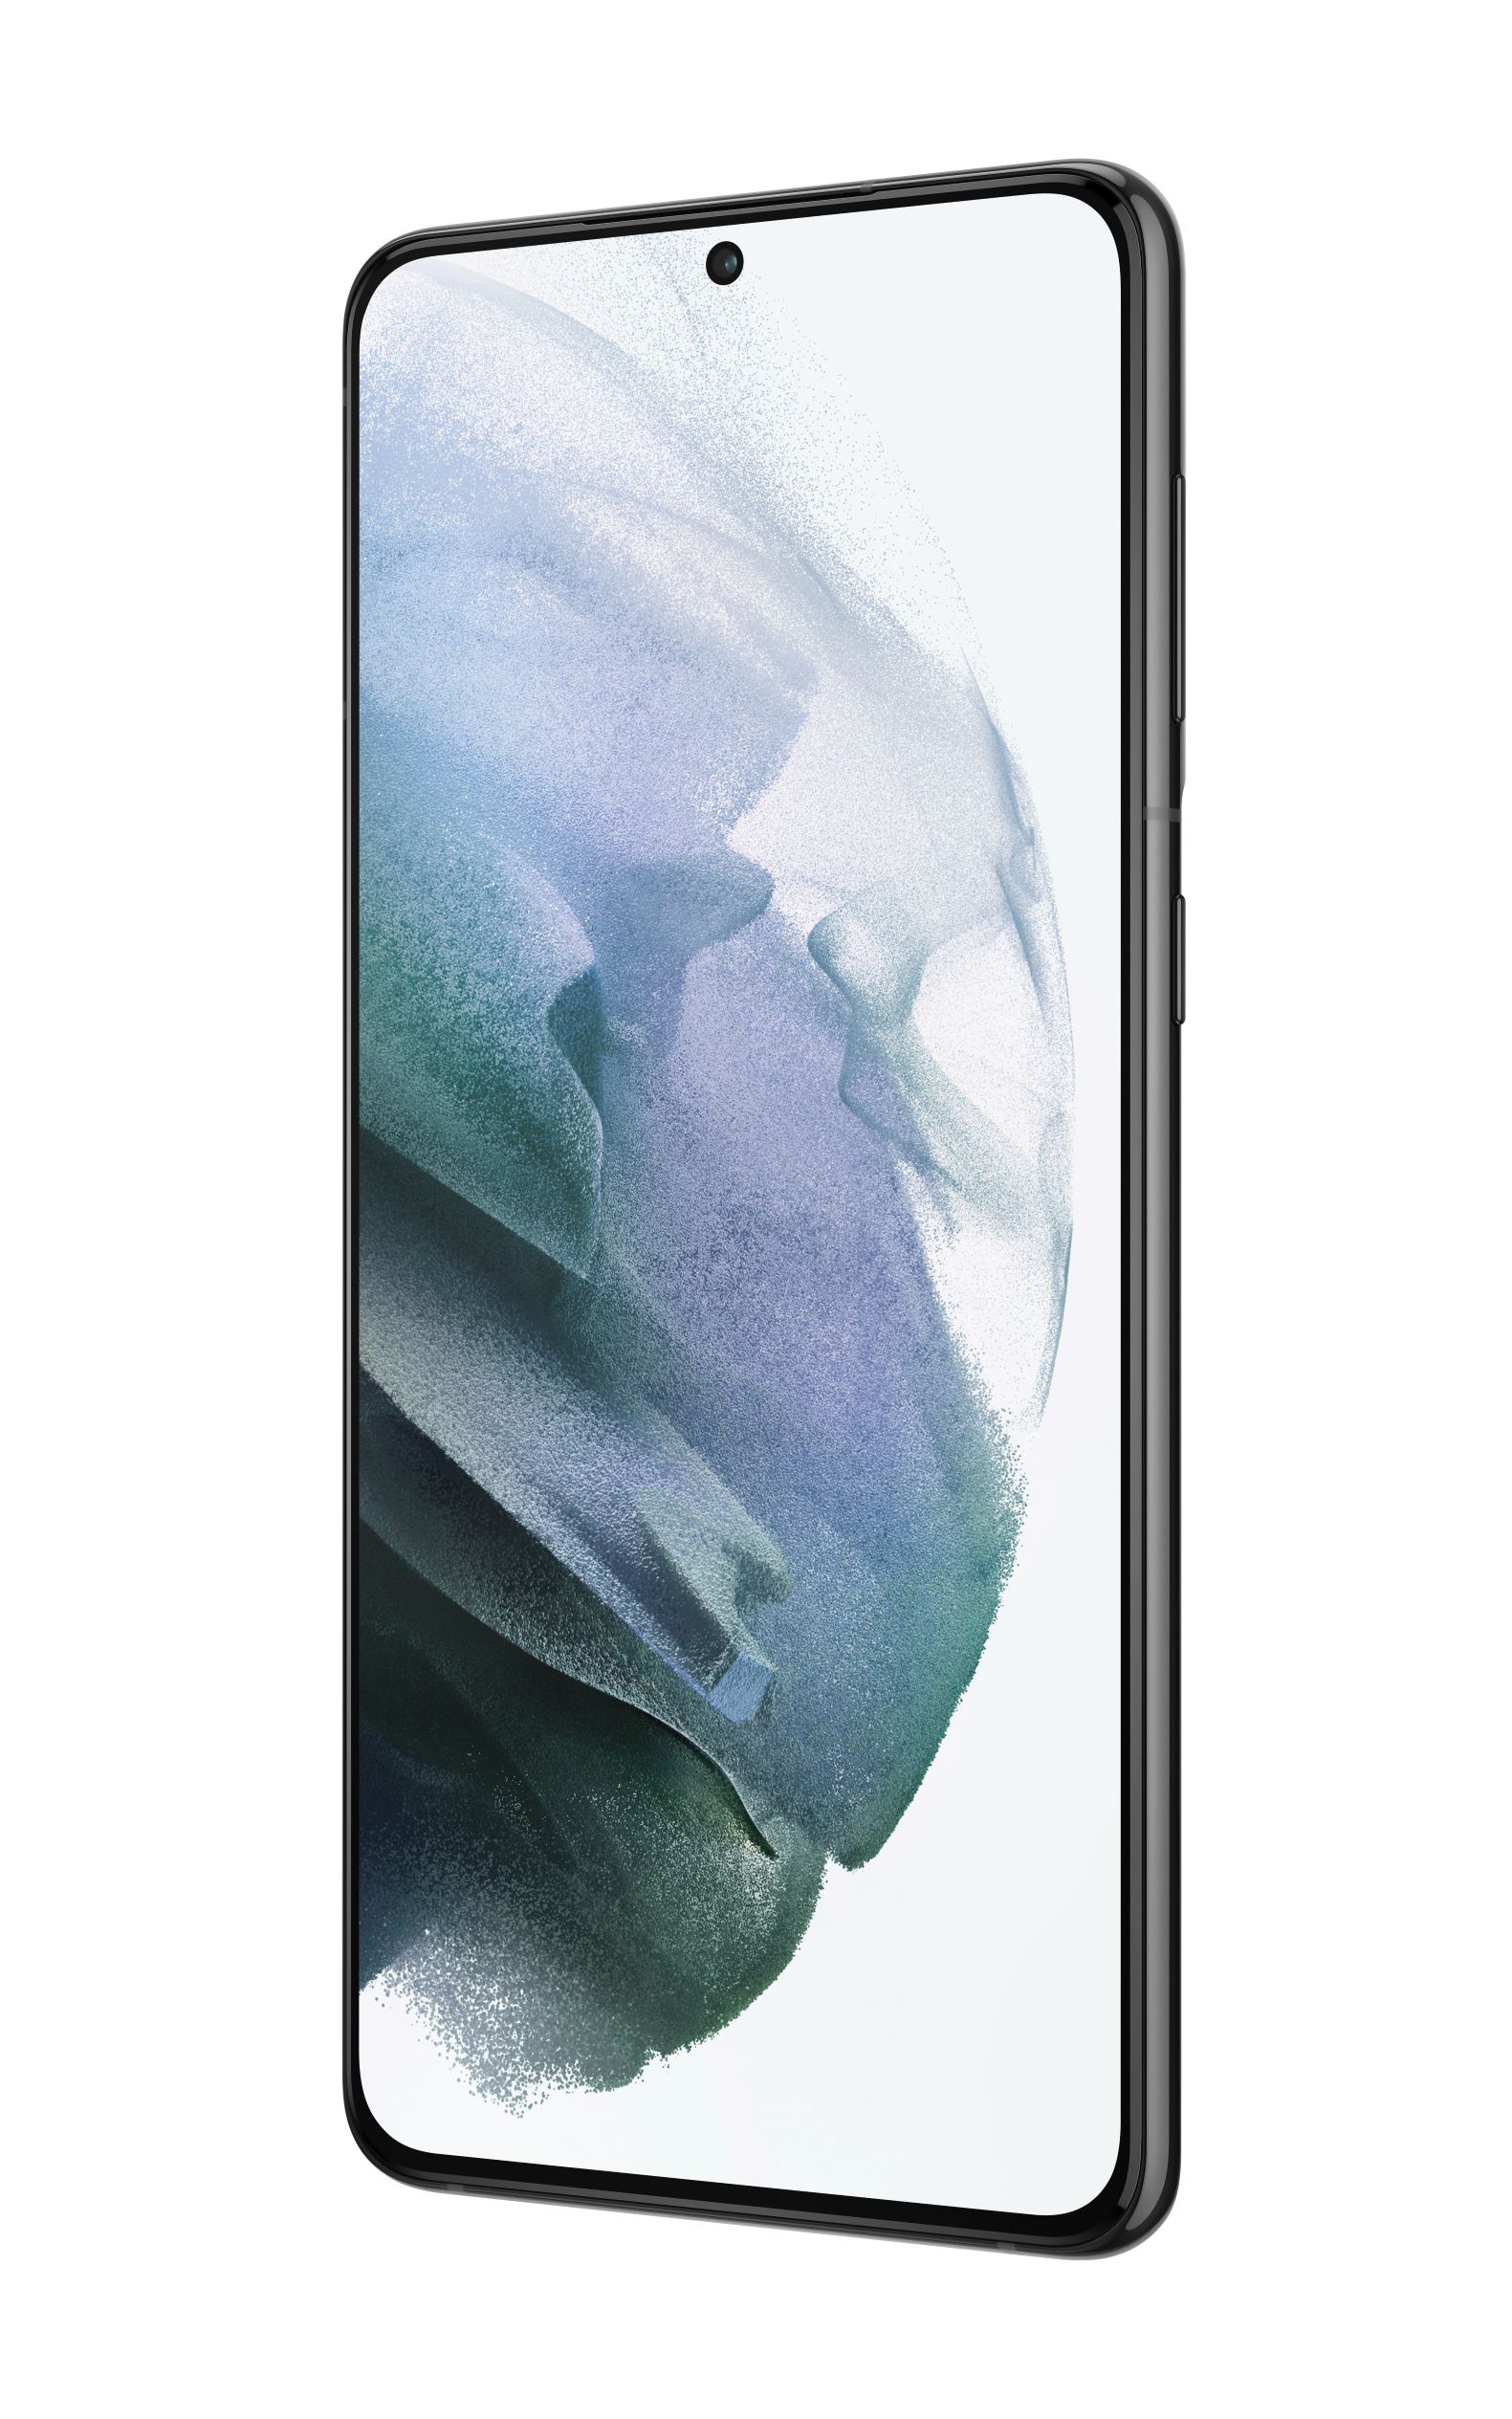 Verizon Samsung Galaxy S21+ 5G Black 128GB - image 2 of 2